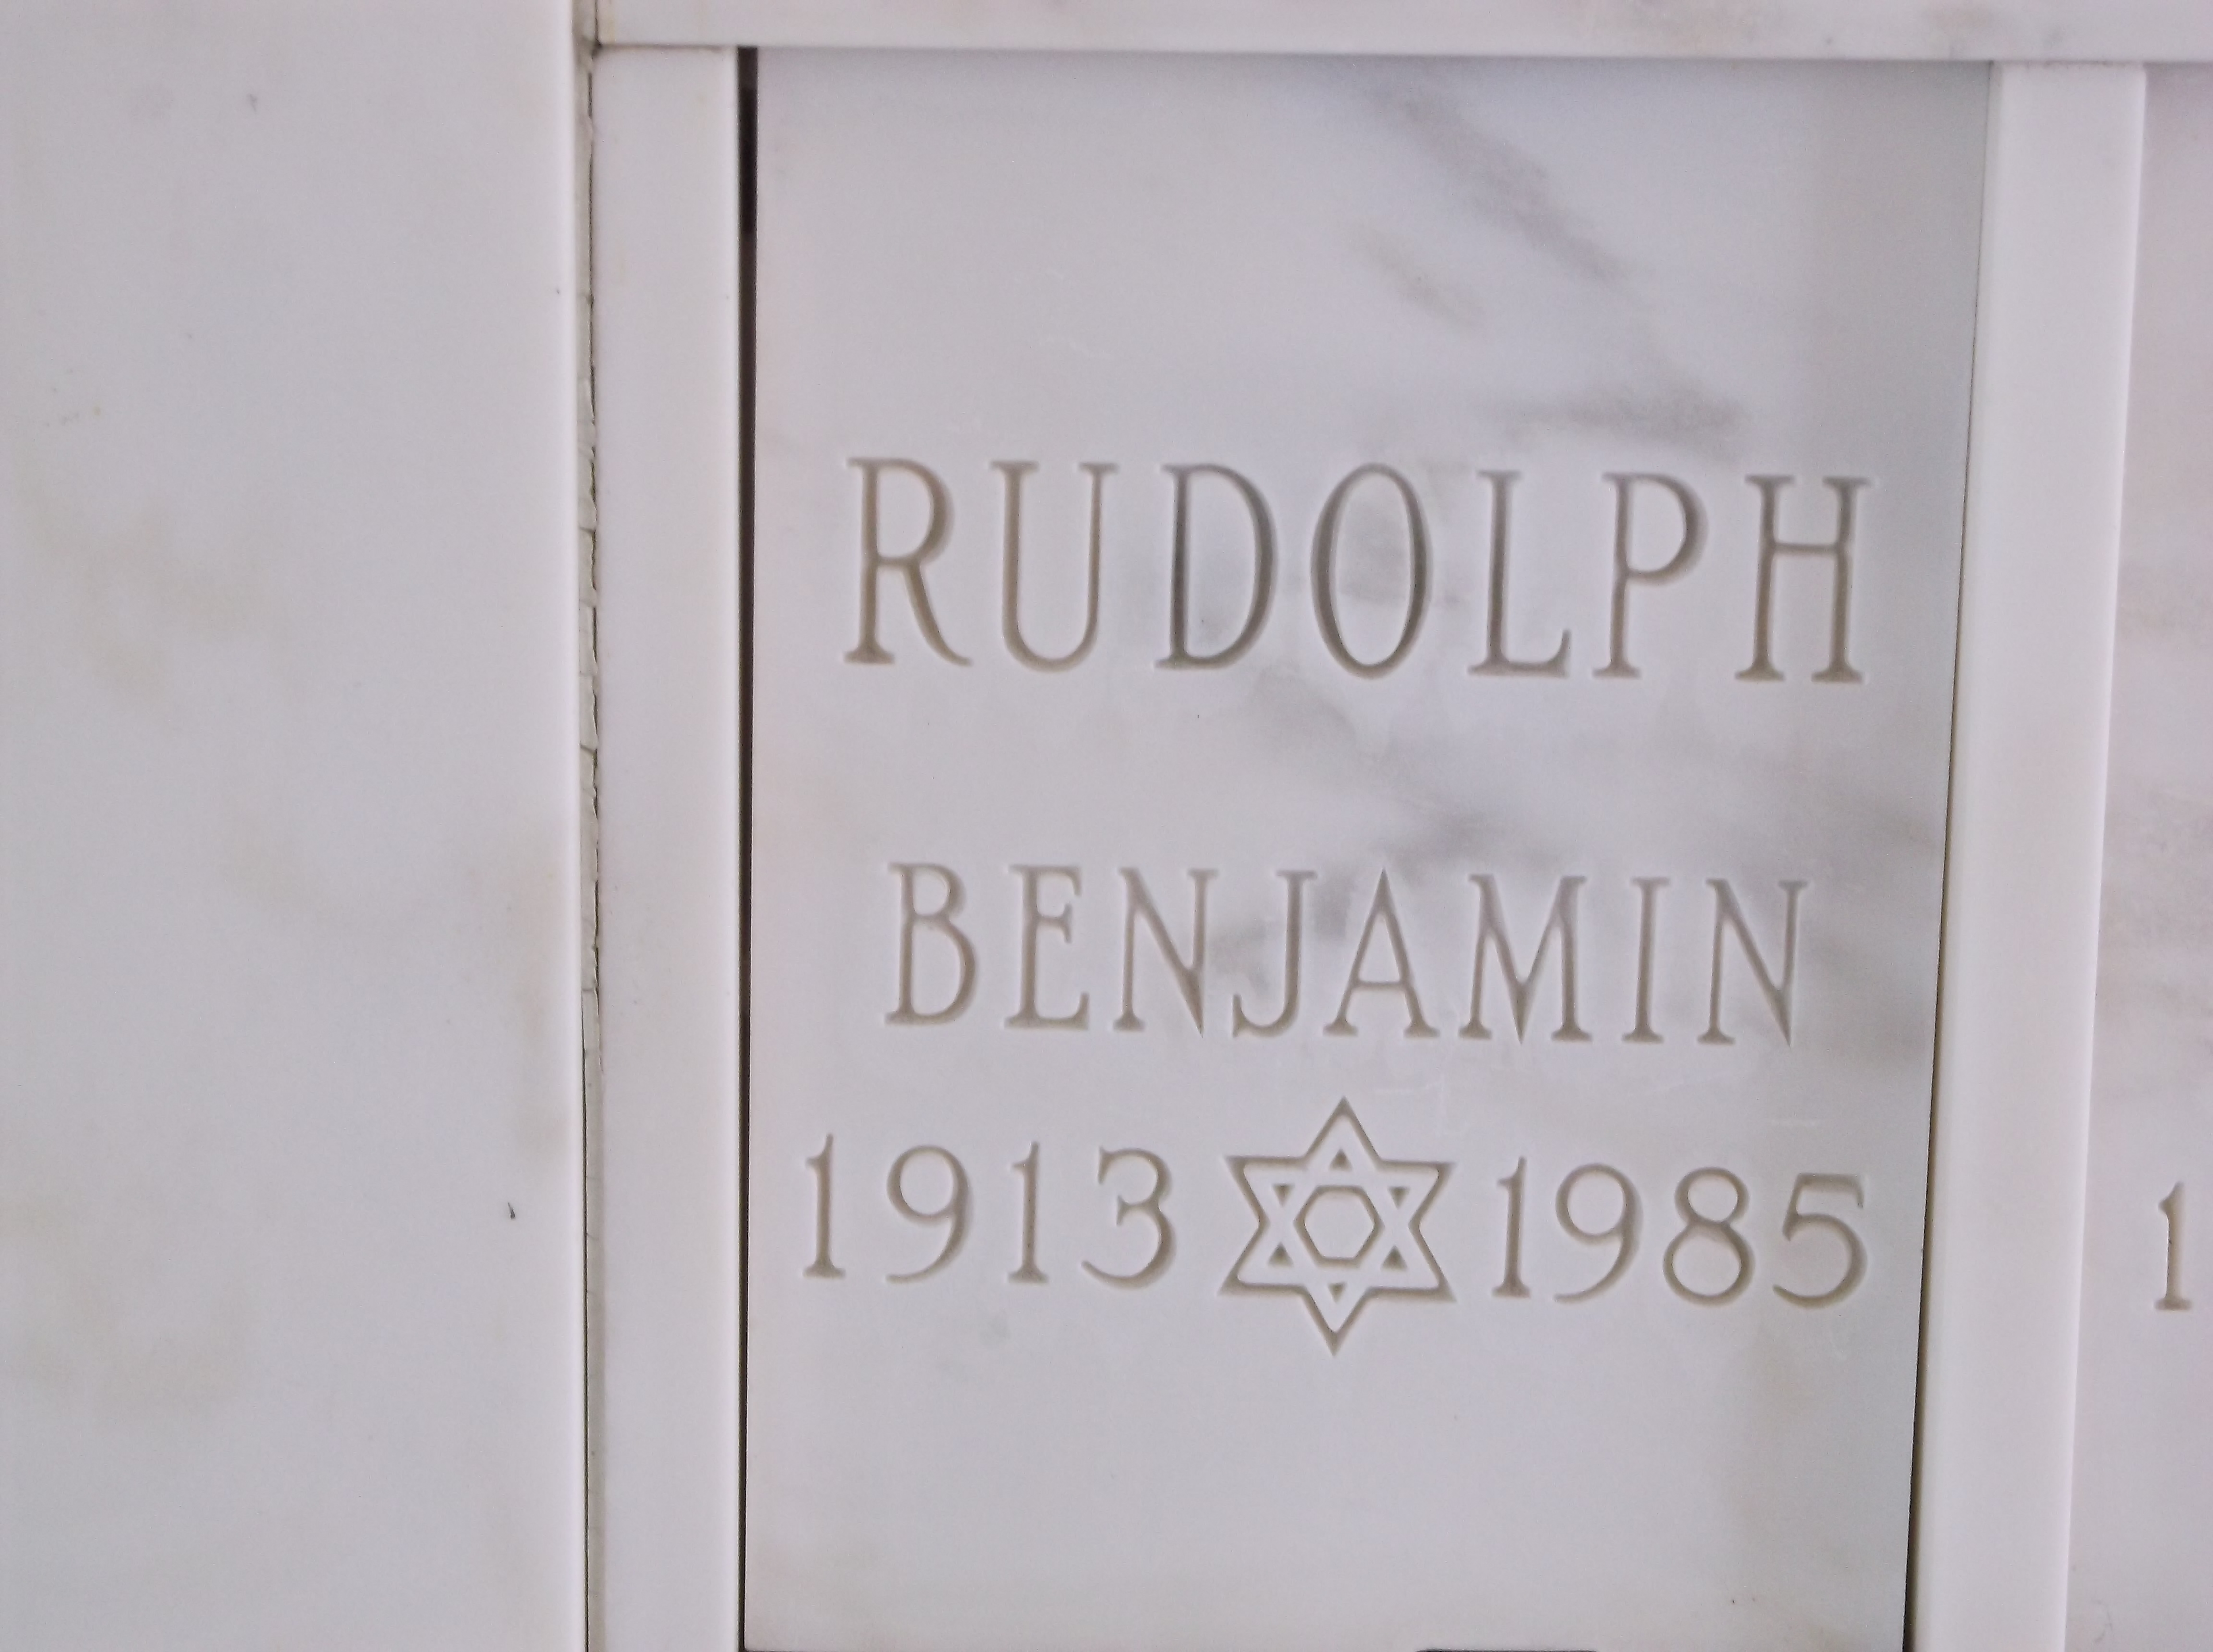 Benjamin Rudolph